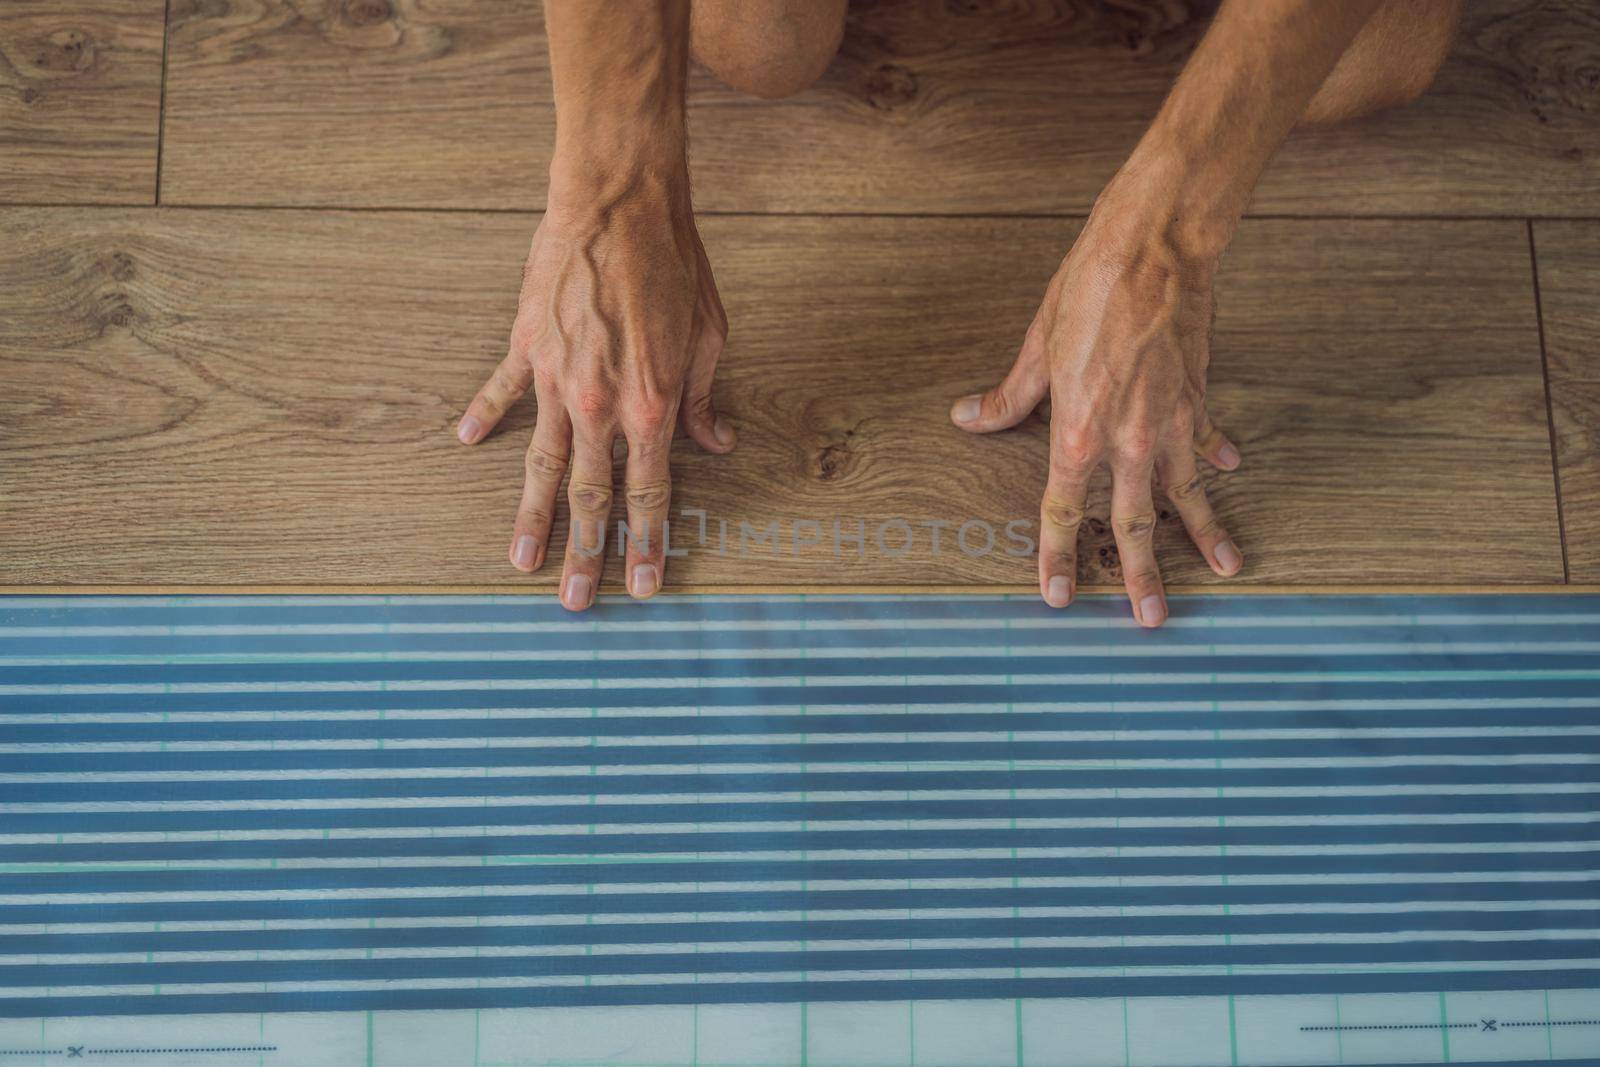 Man installing new wooden laminate flooring on a warm film floor. Infrared floor heating system under laminate floor by galitskaya